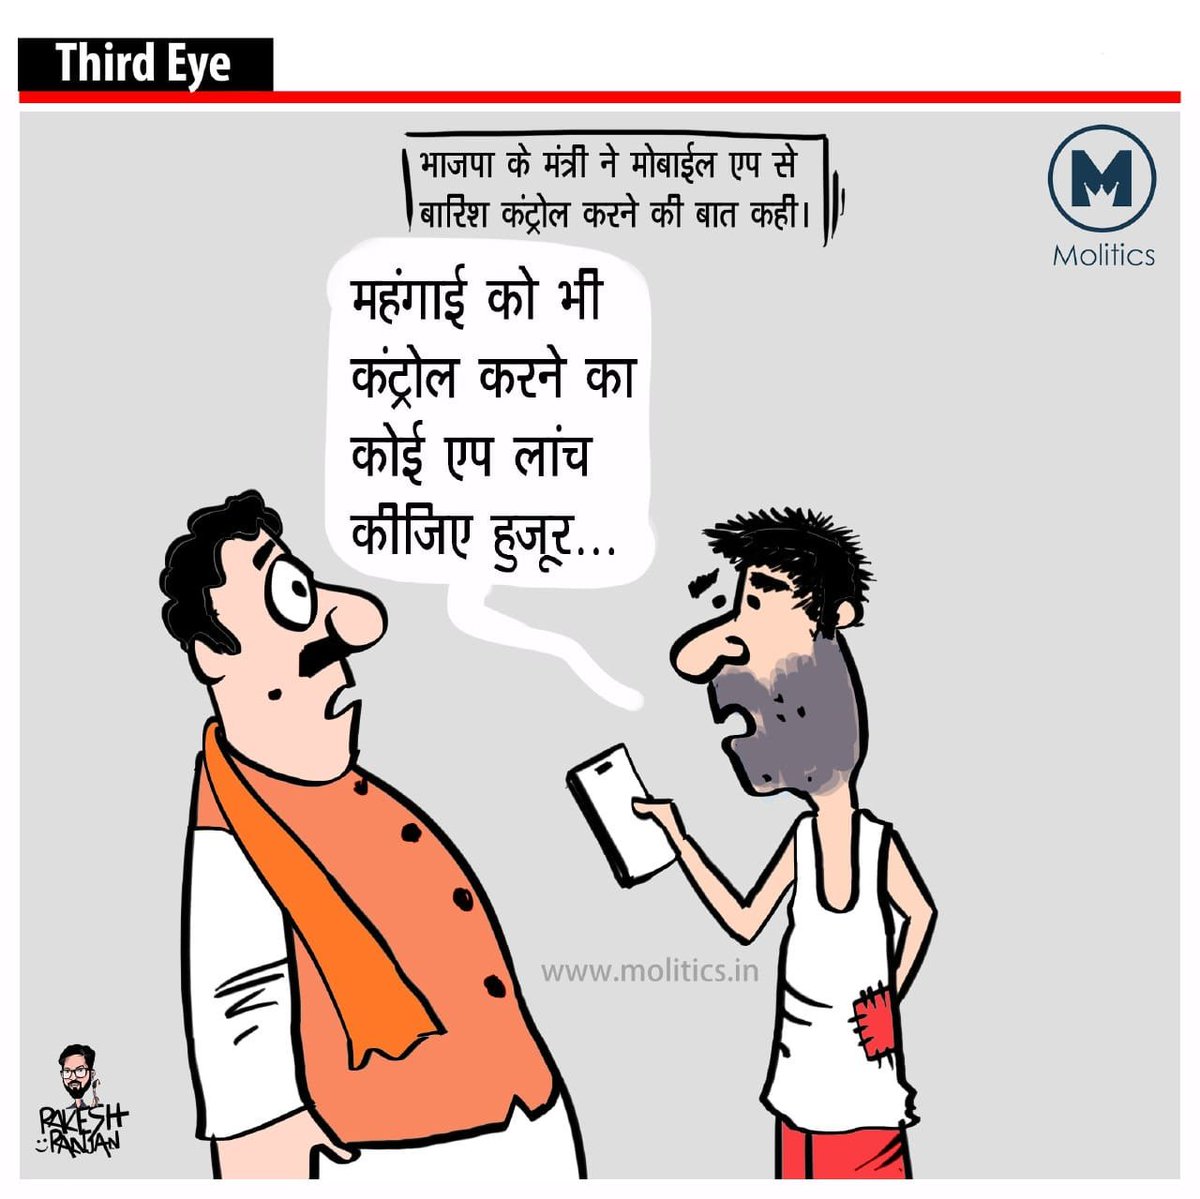 जुमलेबाजी पहचानने का भी ऐप बनाइए हुजूर!

#DhanSinghRawat #Uttarakhand @cartoonistrrs